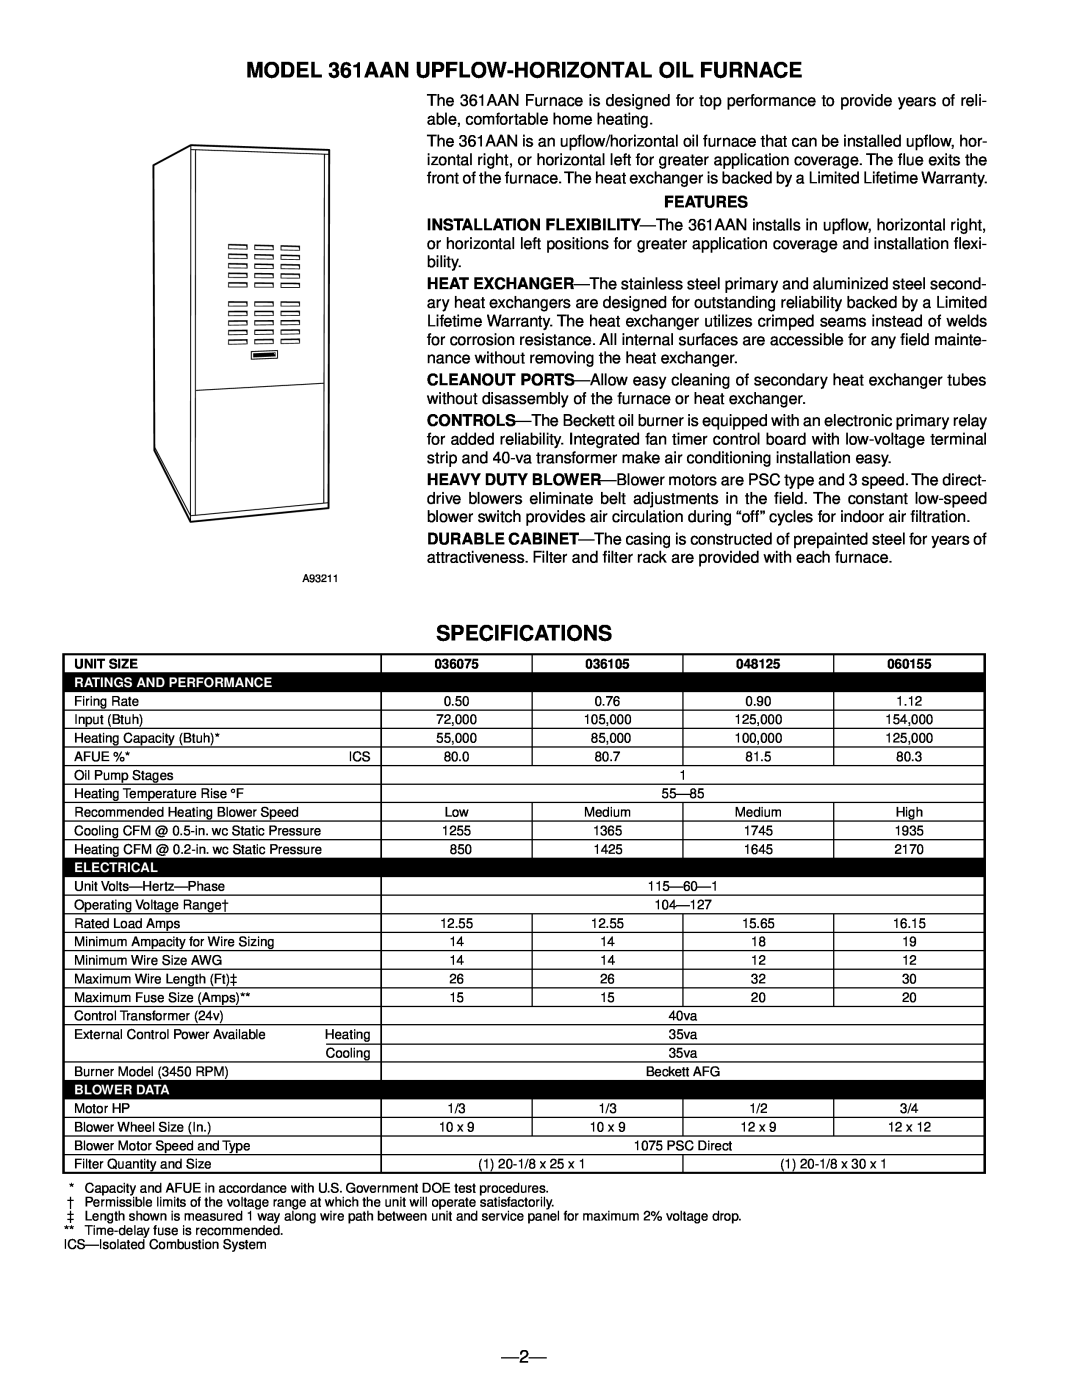 Bryant 363AAP 361AAN manual MODEL 361AAN UPFLOW-HORIZONTALOIL FURNACE, Specifications, Features 